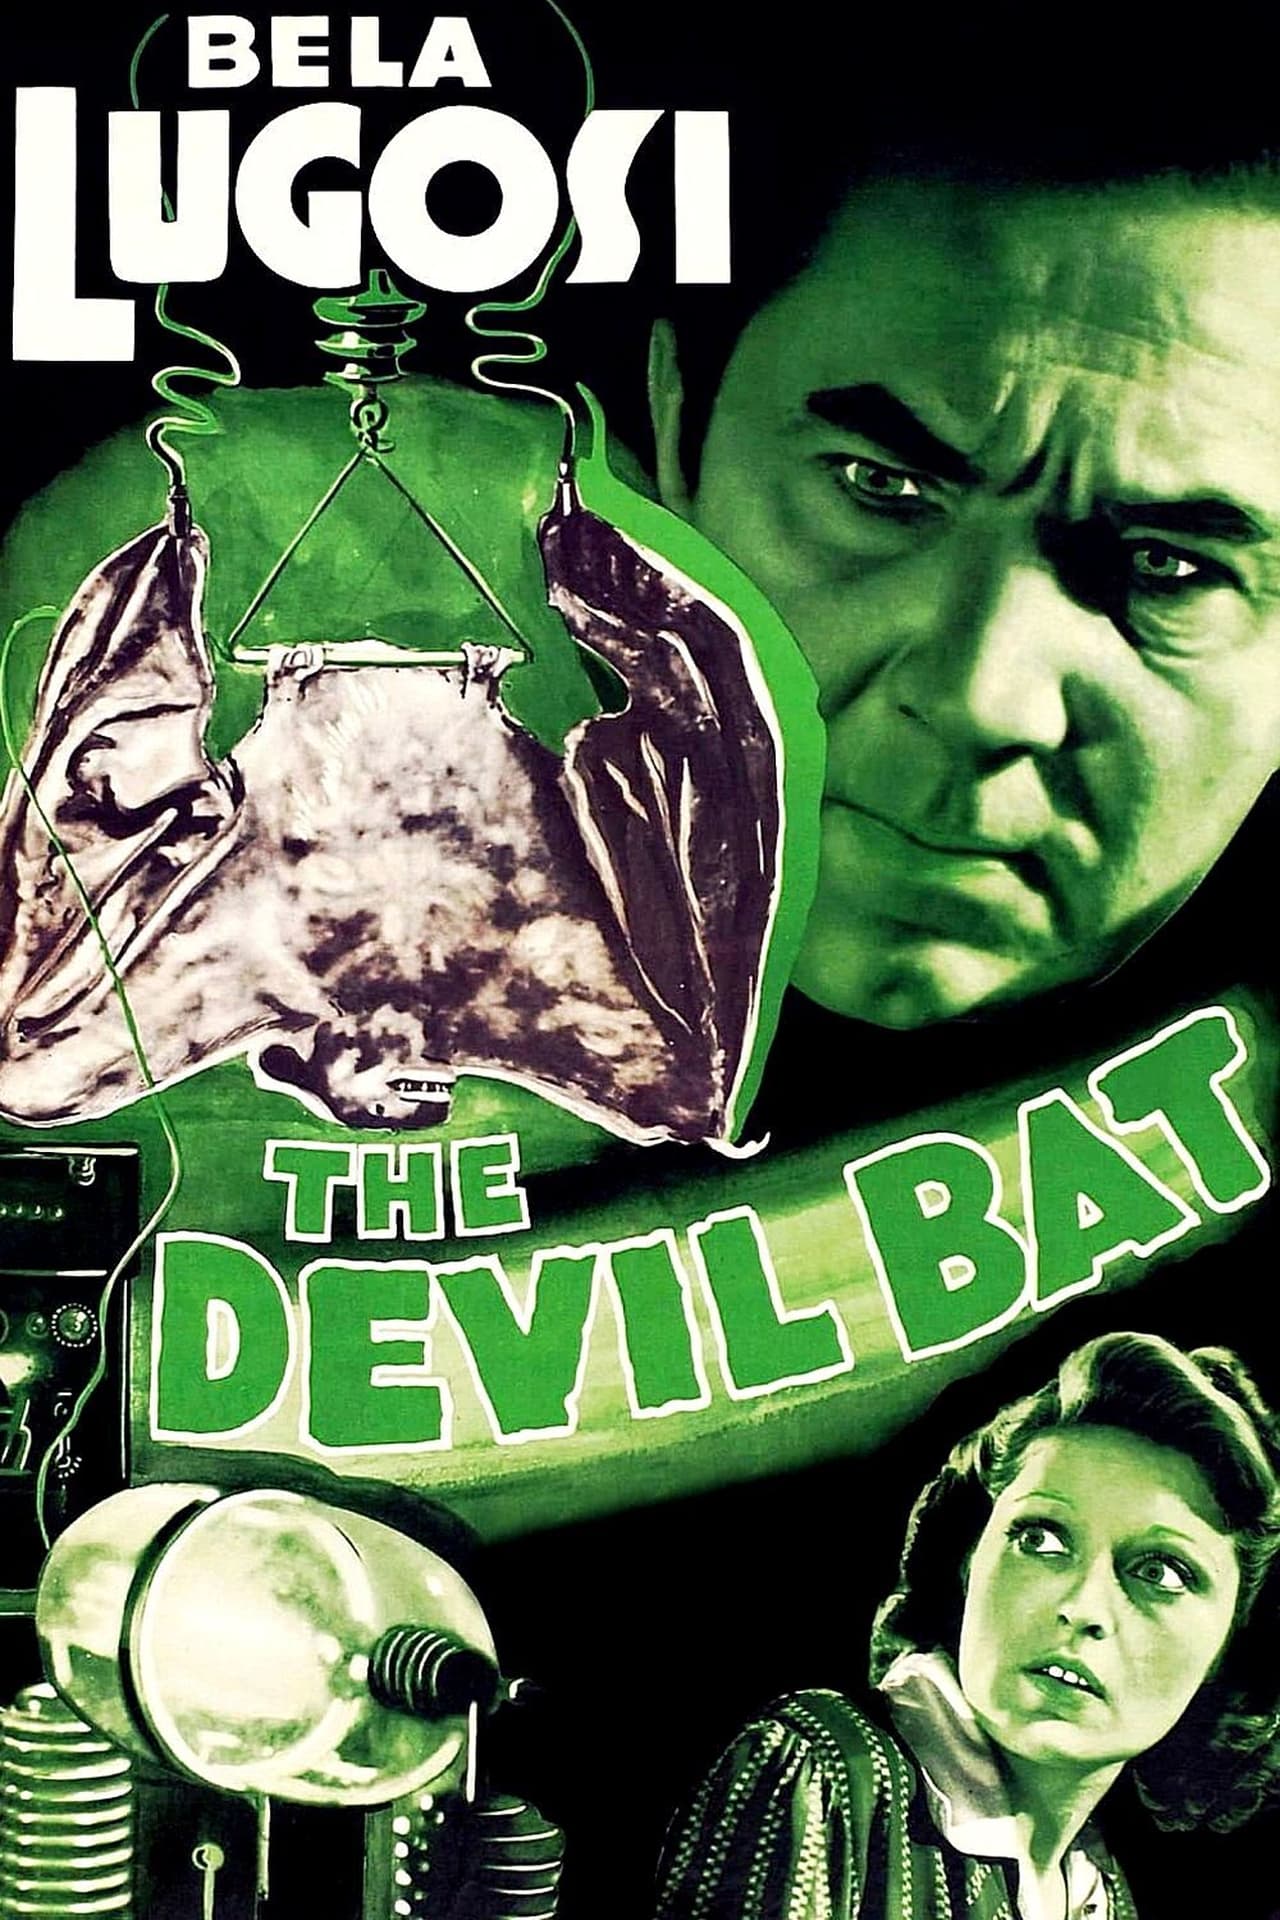 The Devil Bat poster